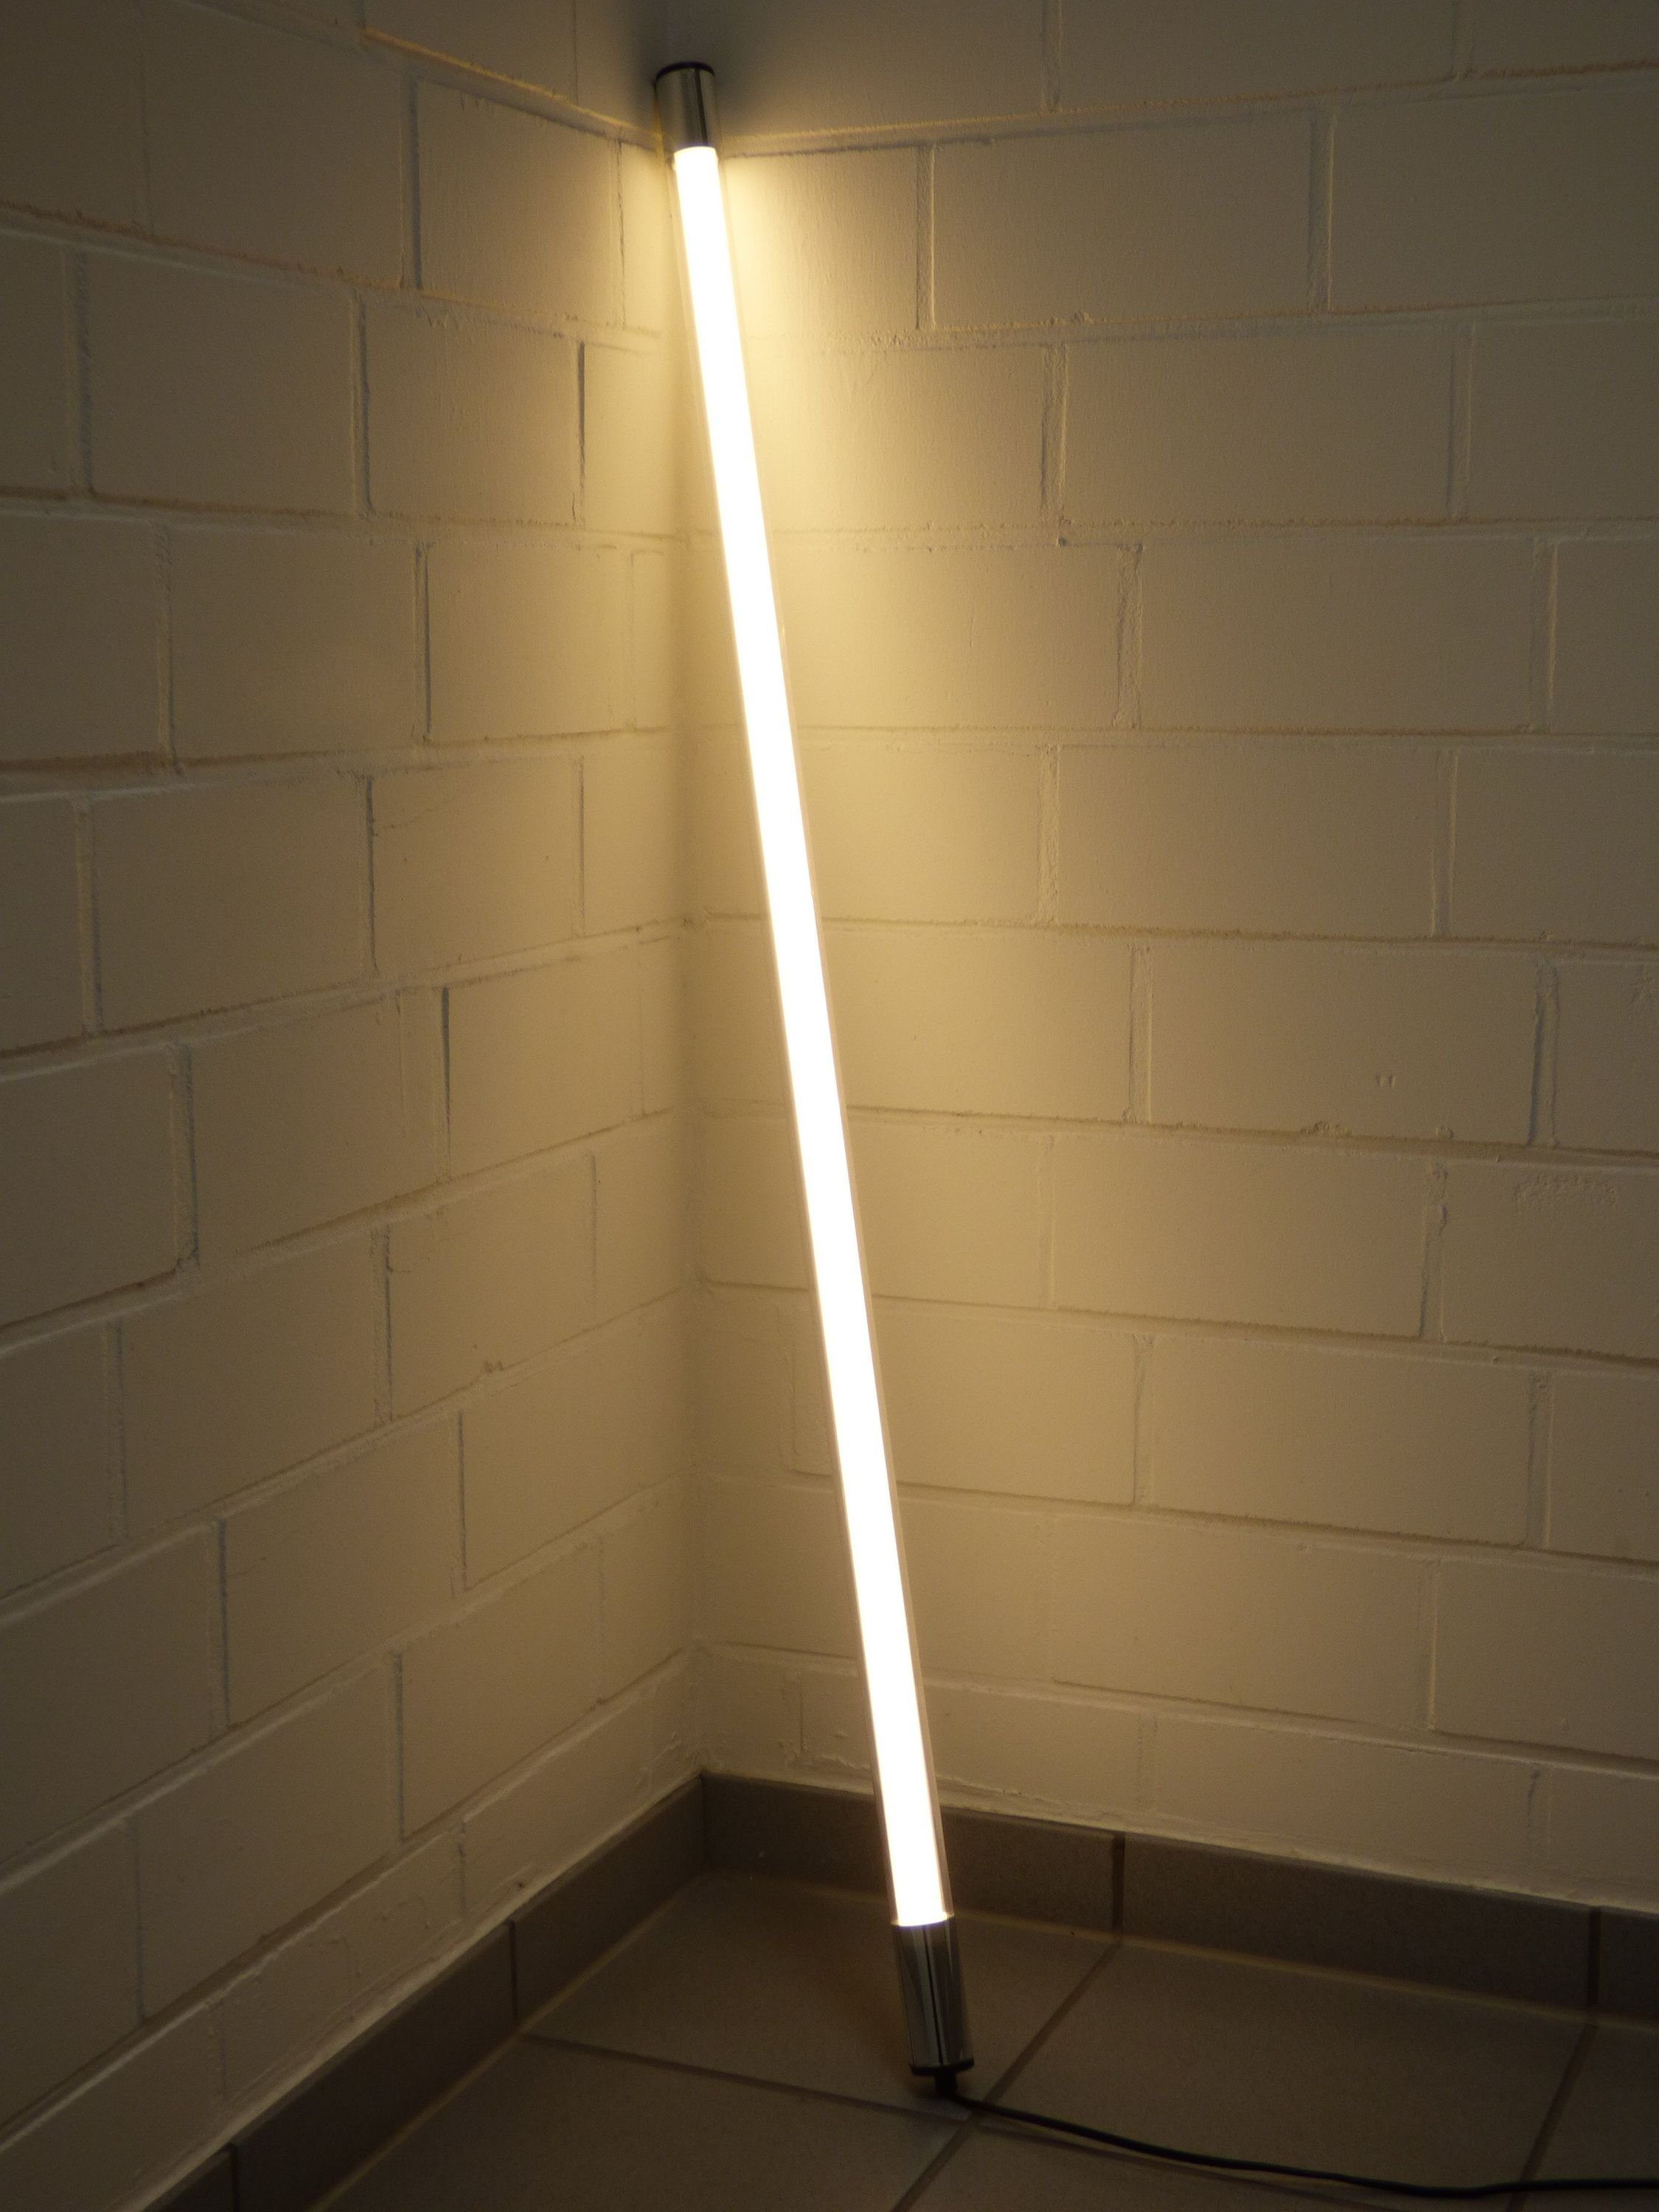 XENON LED Wandleuchte 6514 LED Leuchtstab 24 Watt warm weiß 2300 Lumen 153 cm Innen IP-20, LED Röhre T8, Lieferung inklusive 2 Klammern zur Befestigung an Wand oder Decke. | Wandleuchten